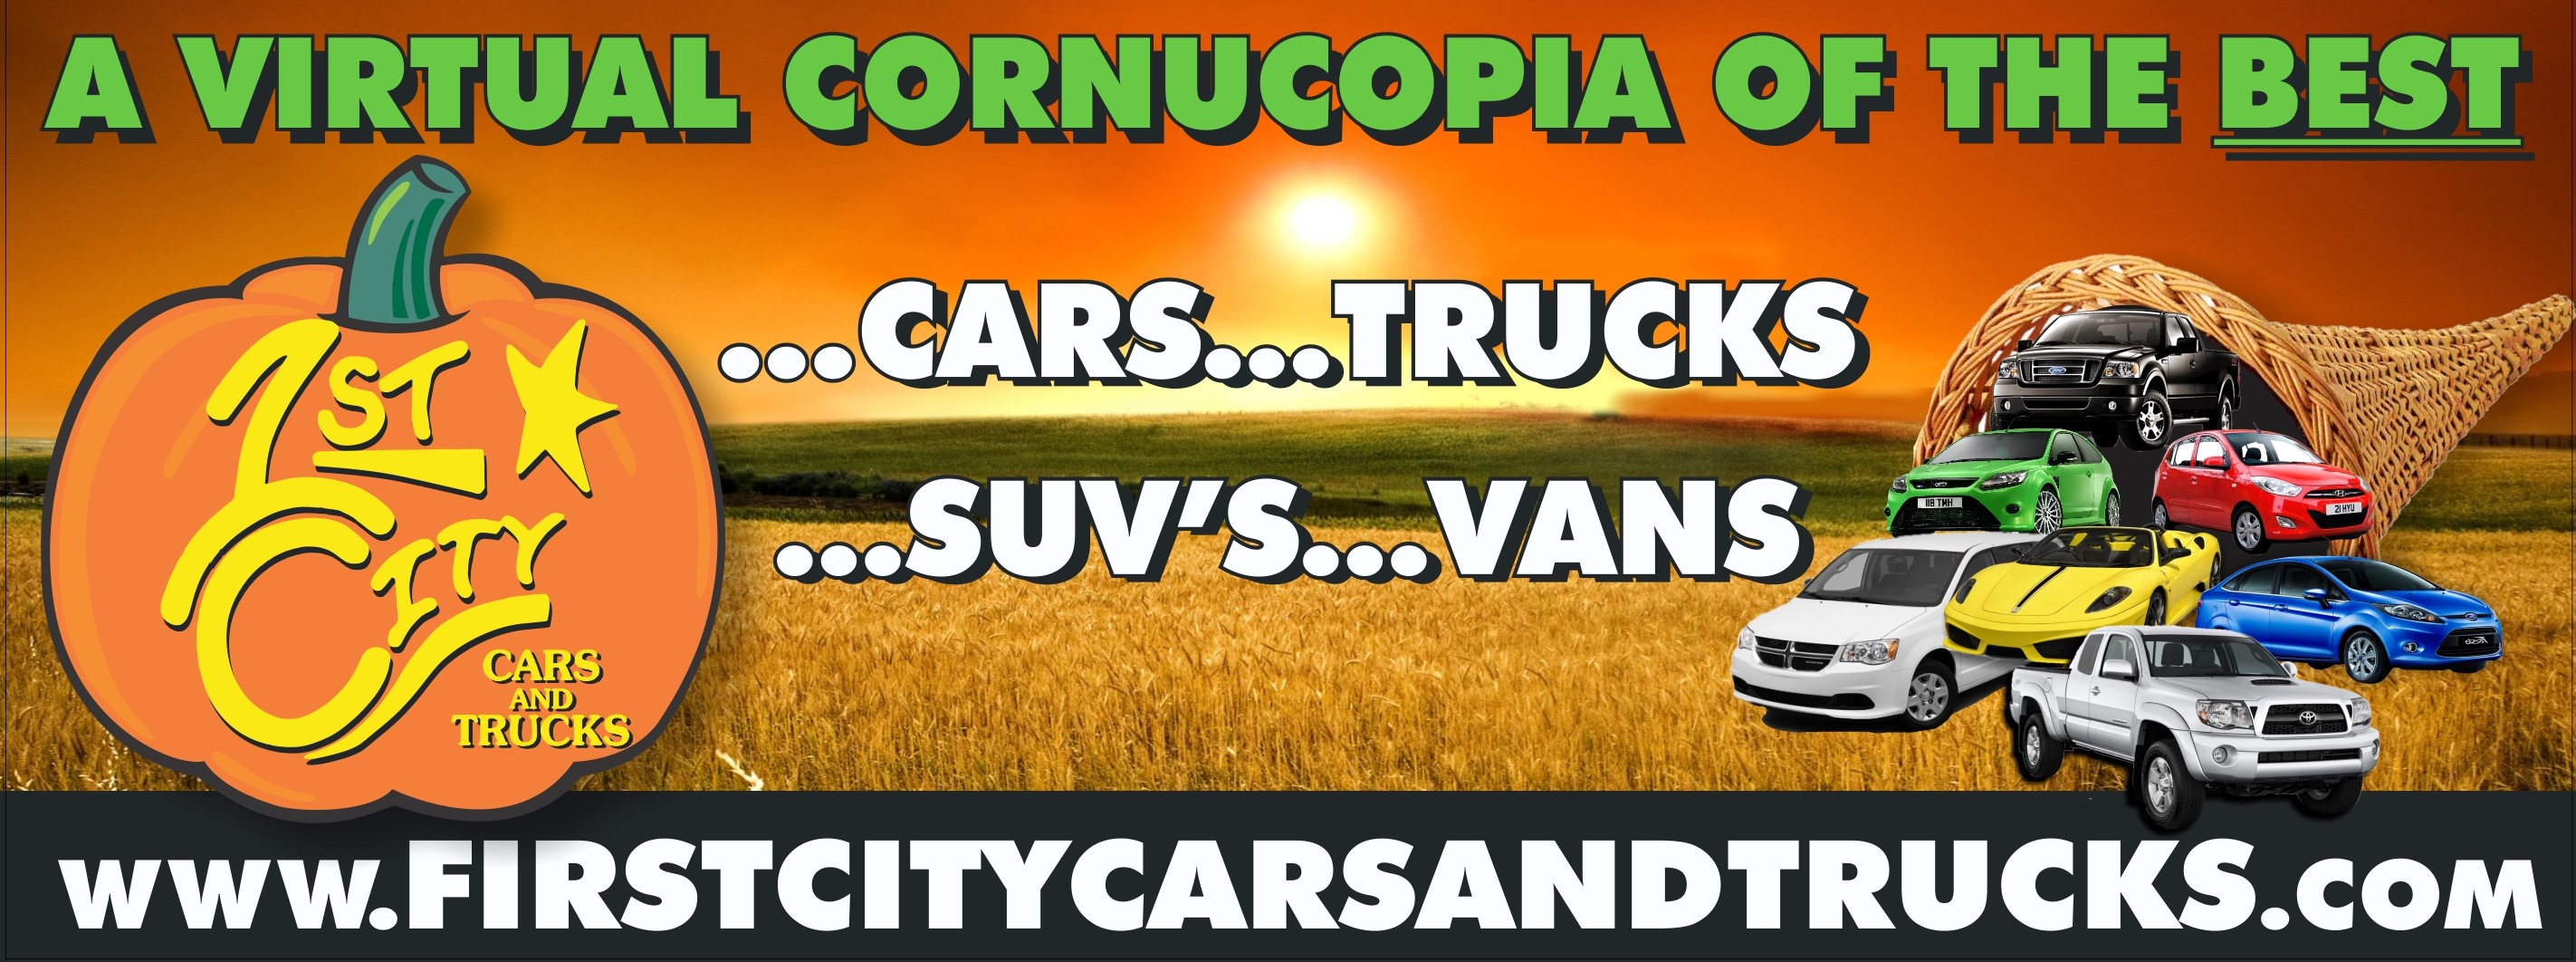 1ST CITY 12x32 cornucopia 2015 prep CARS AND TRUCKS